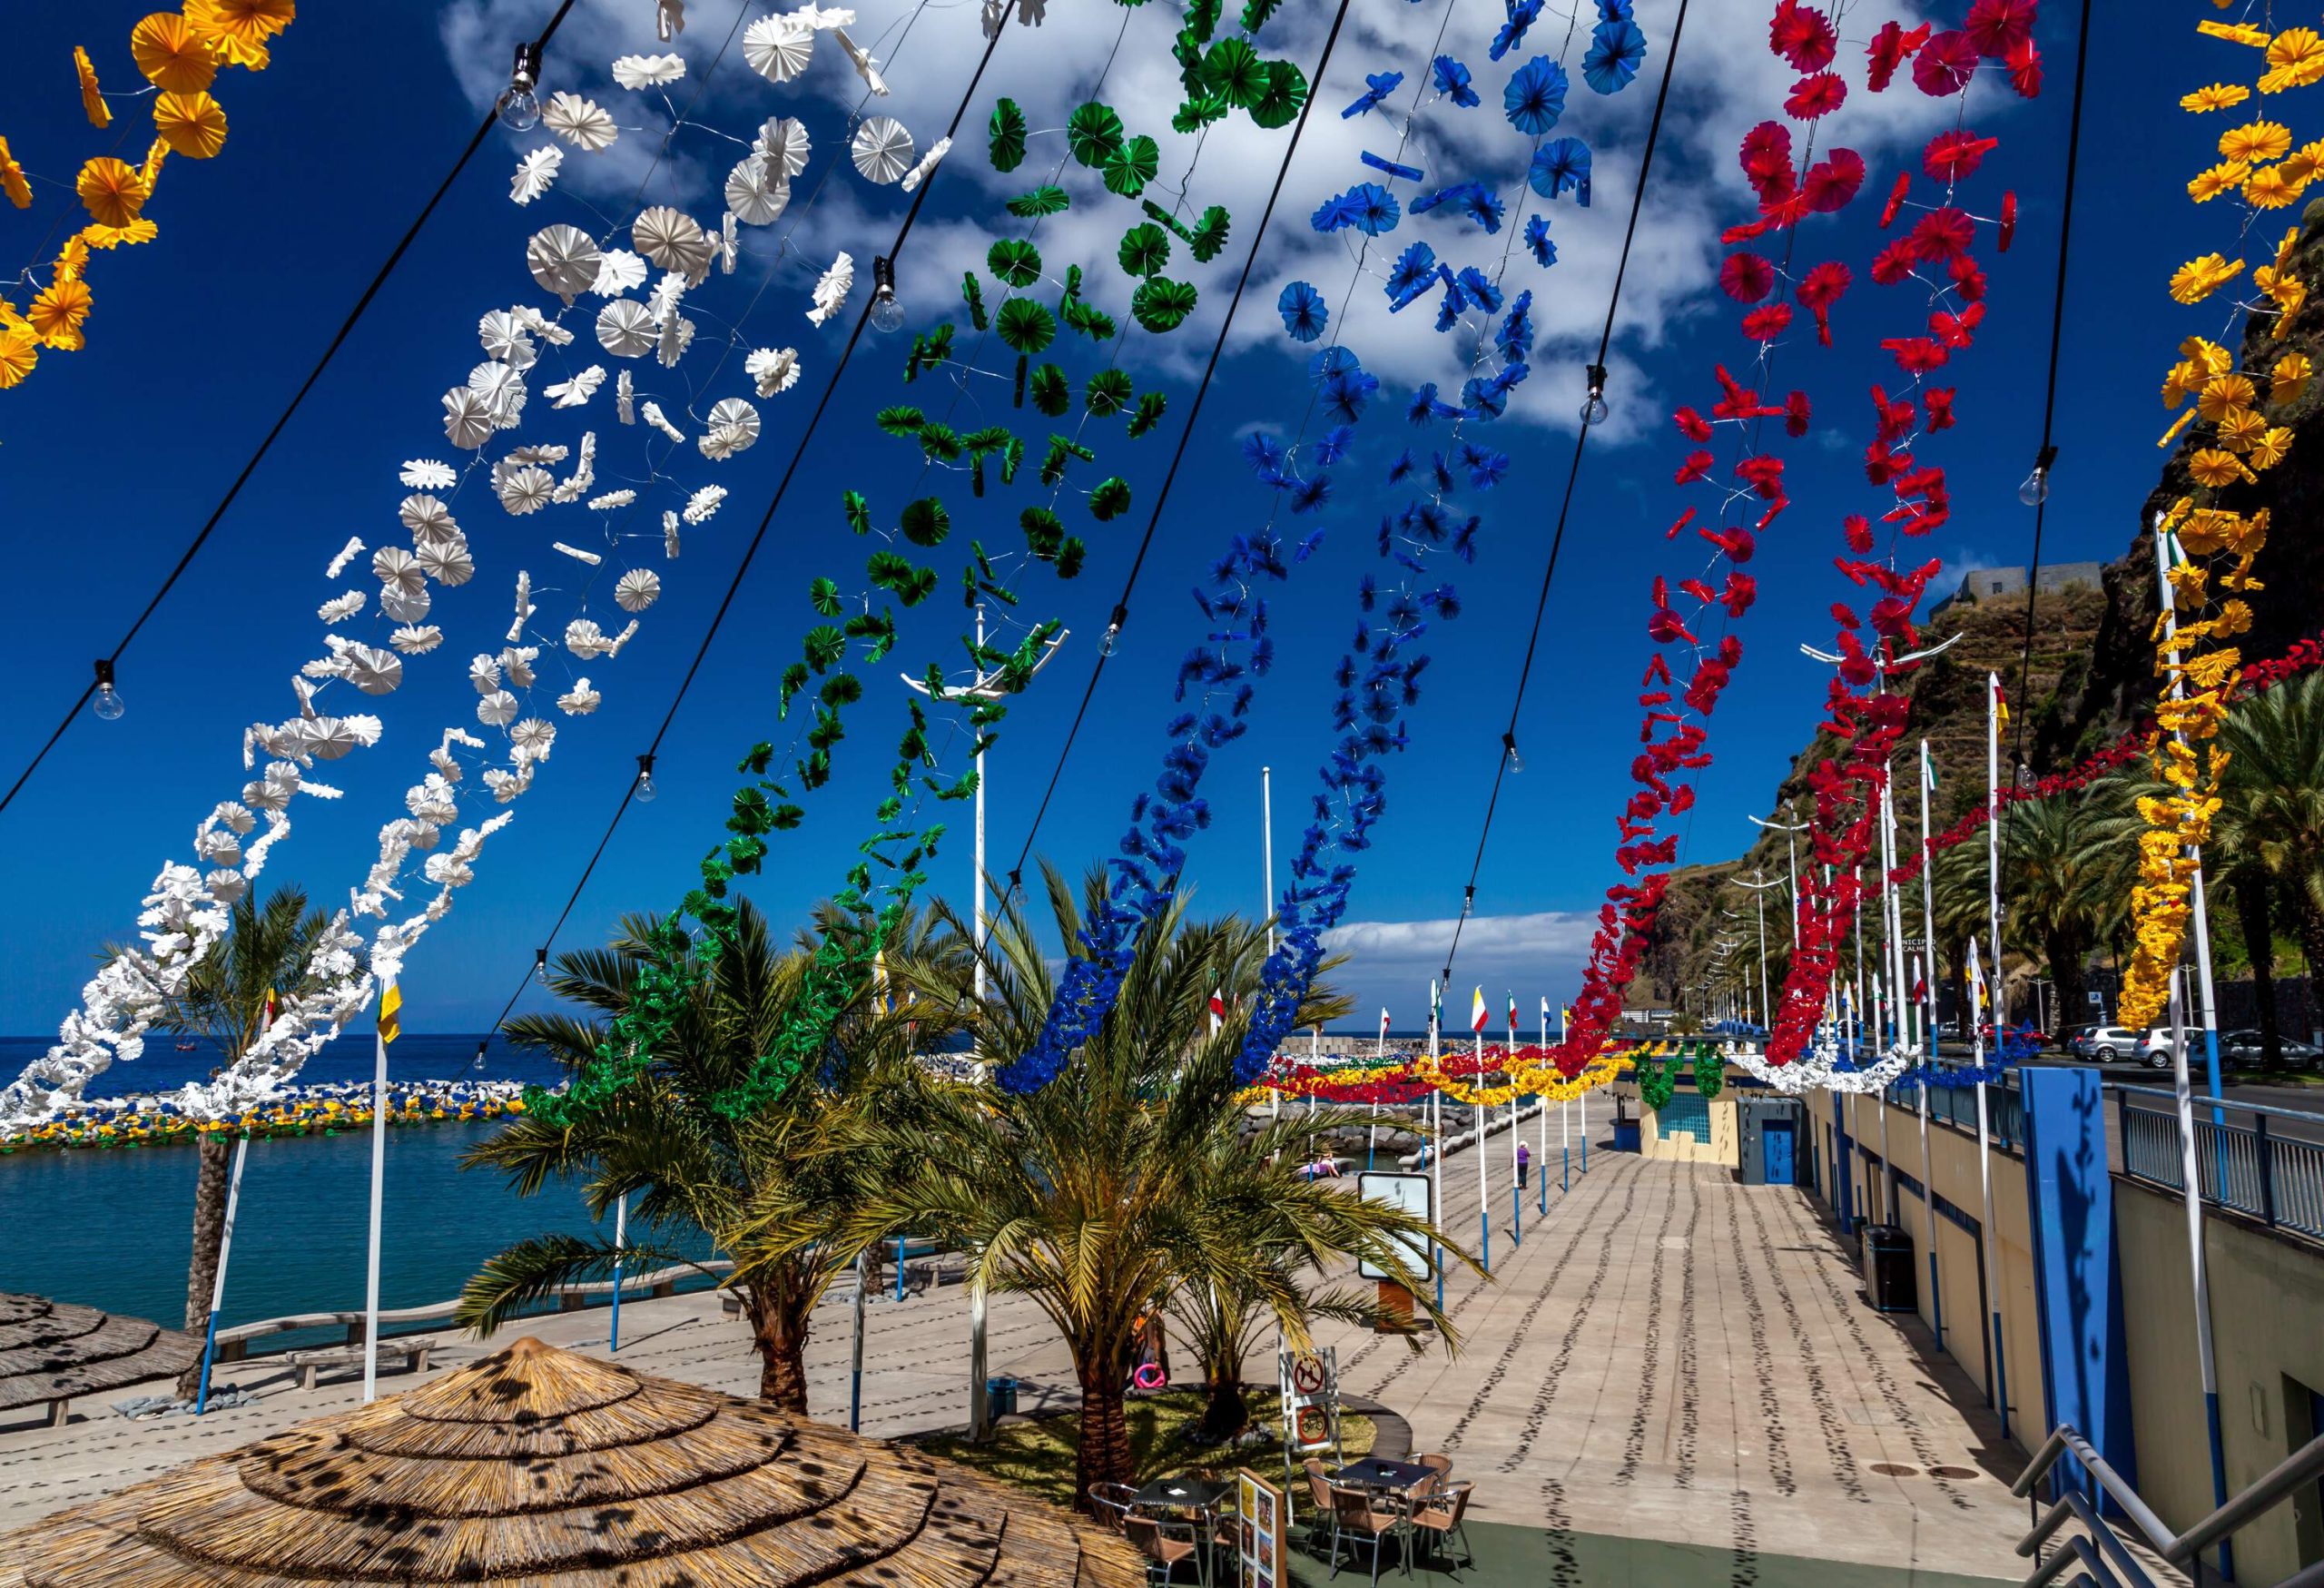 A seaside street adorned with paper flower garlands.